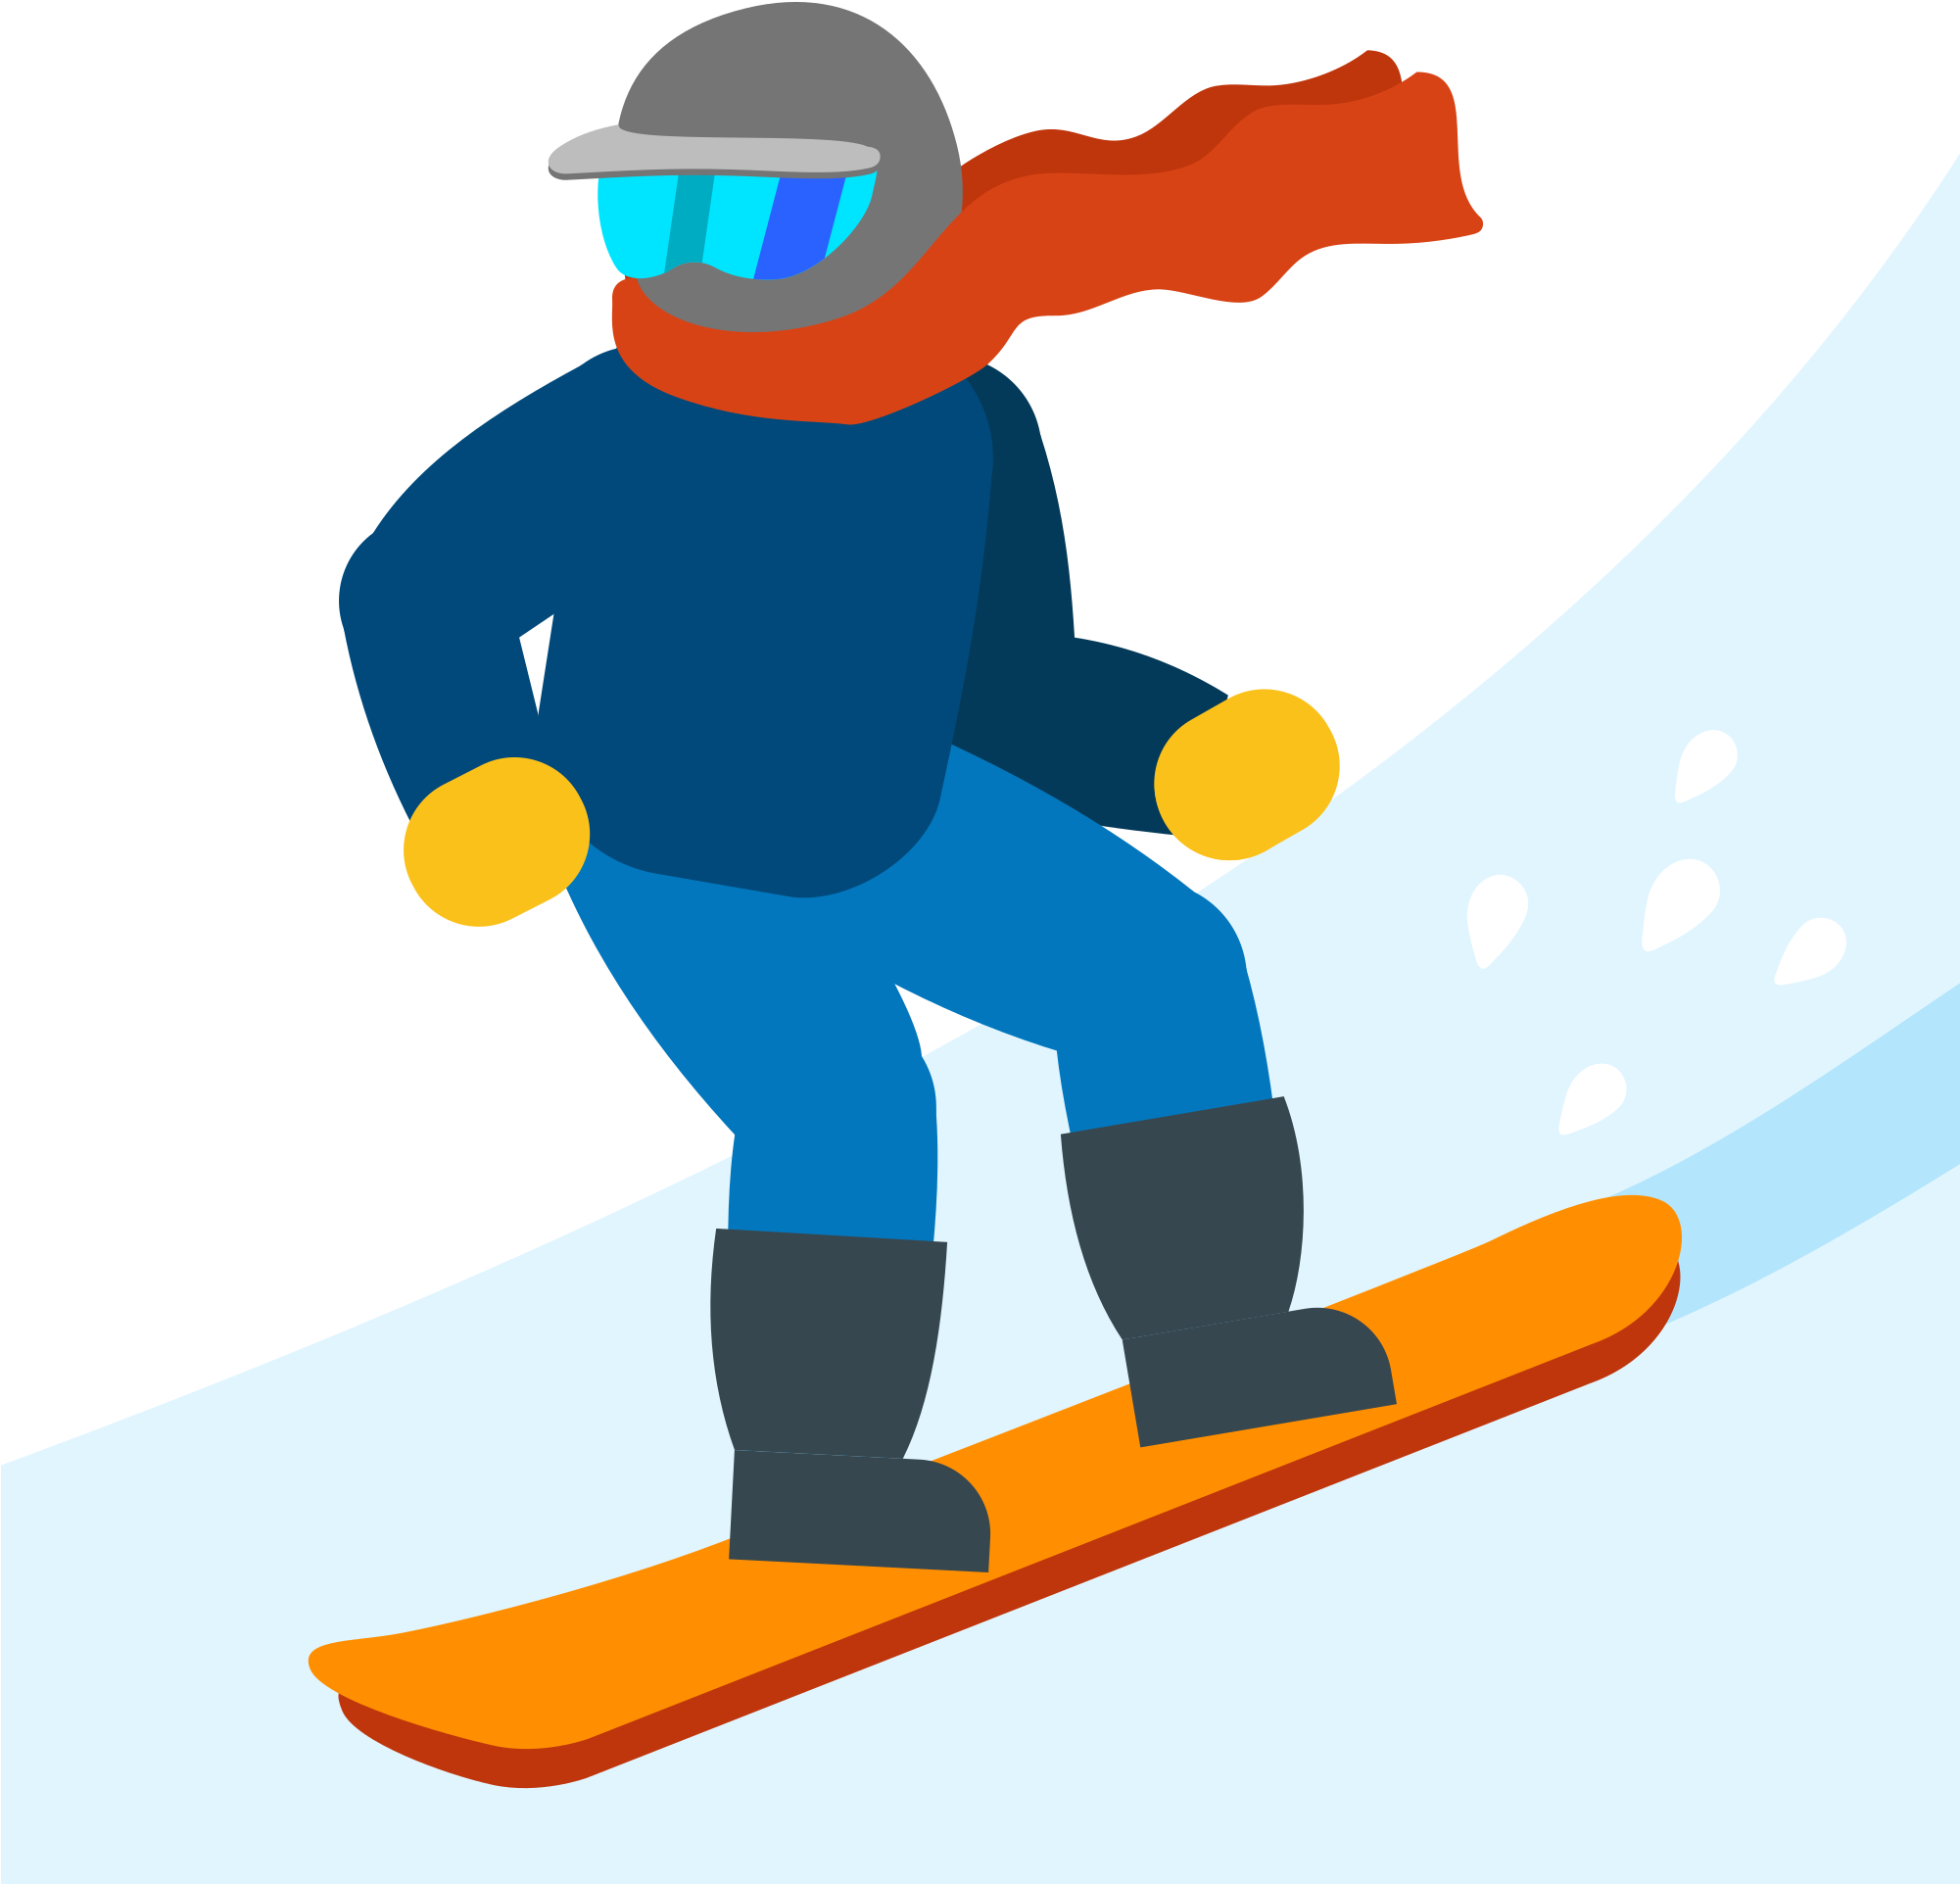 A Cartoon Of A Person Snowboarding